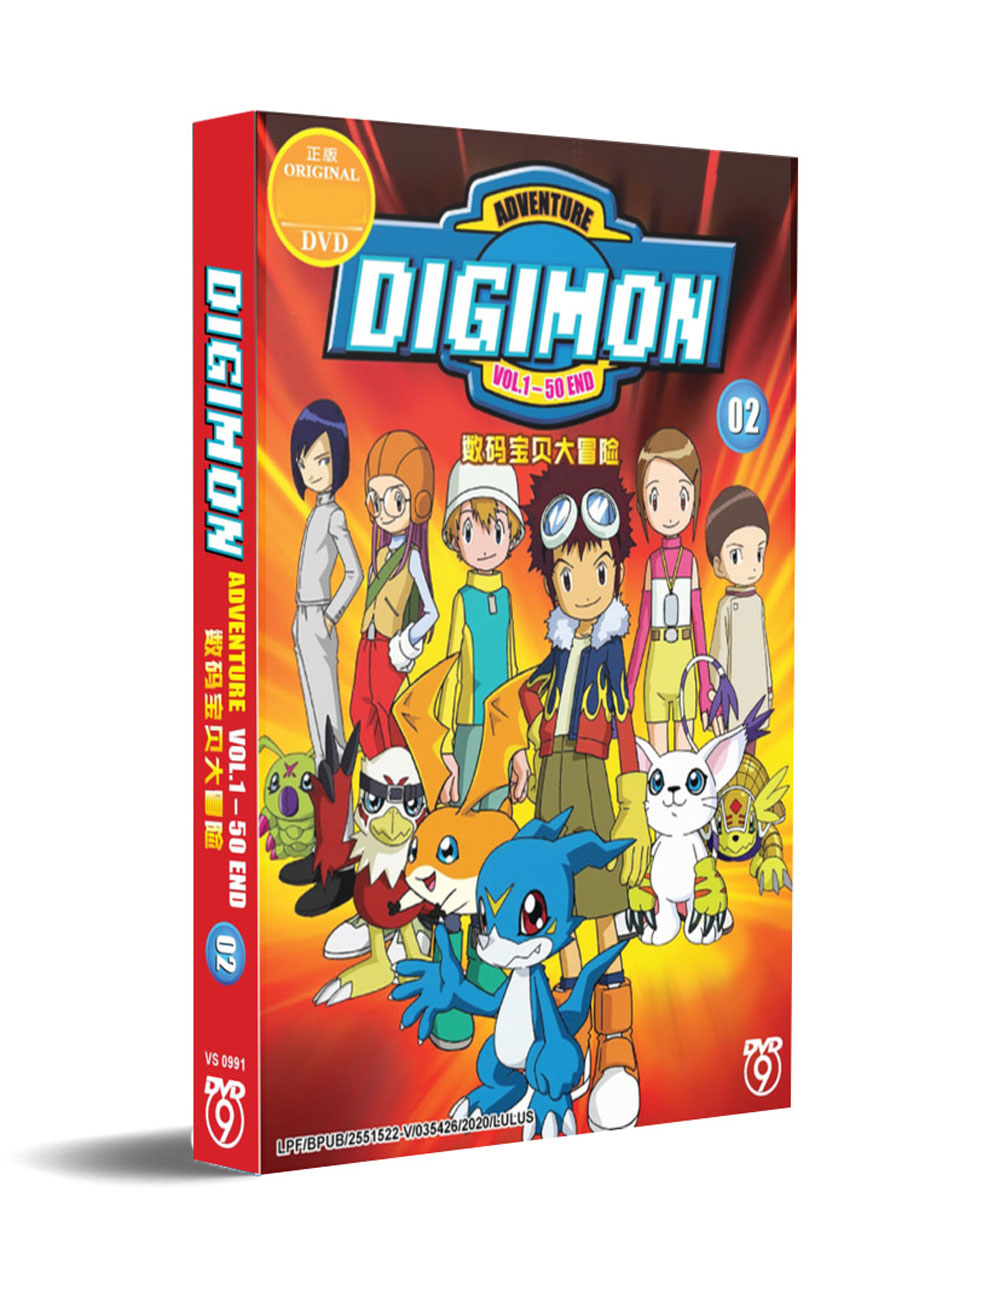 Digimon Adventure 02 (DVD) (2000-2001) Anime